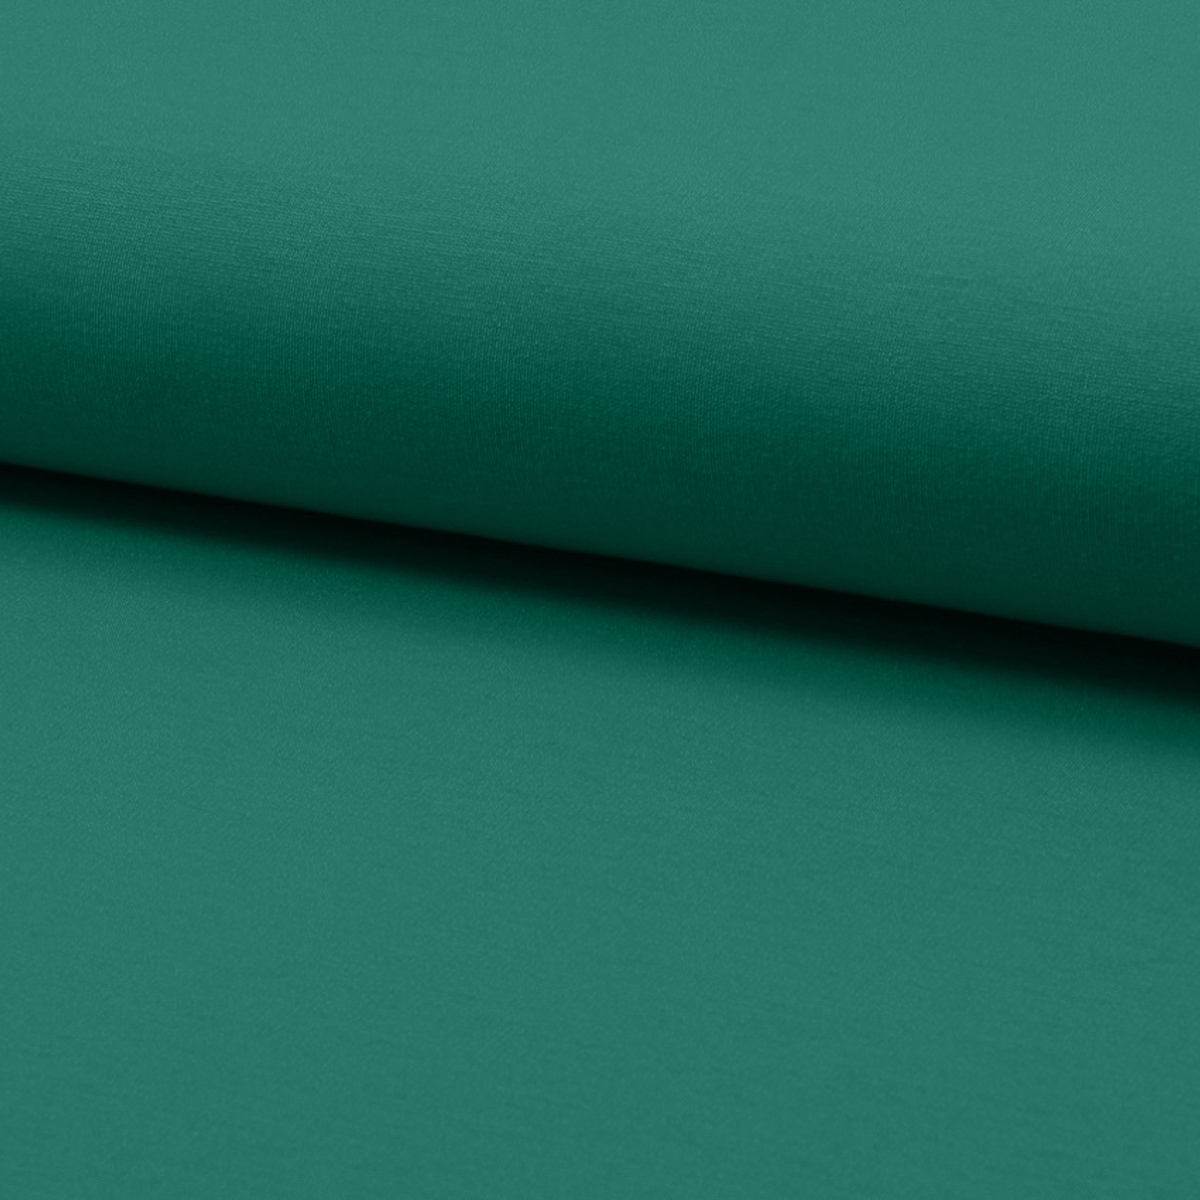 Romanitjersey peridot-grün/bermuda, 60%Viscose, 35%Nylon, 5%Elasthan/Spandex, ca.150cm breit